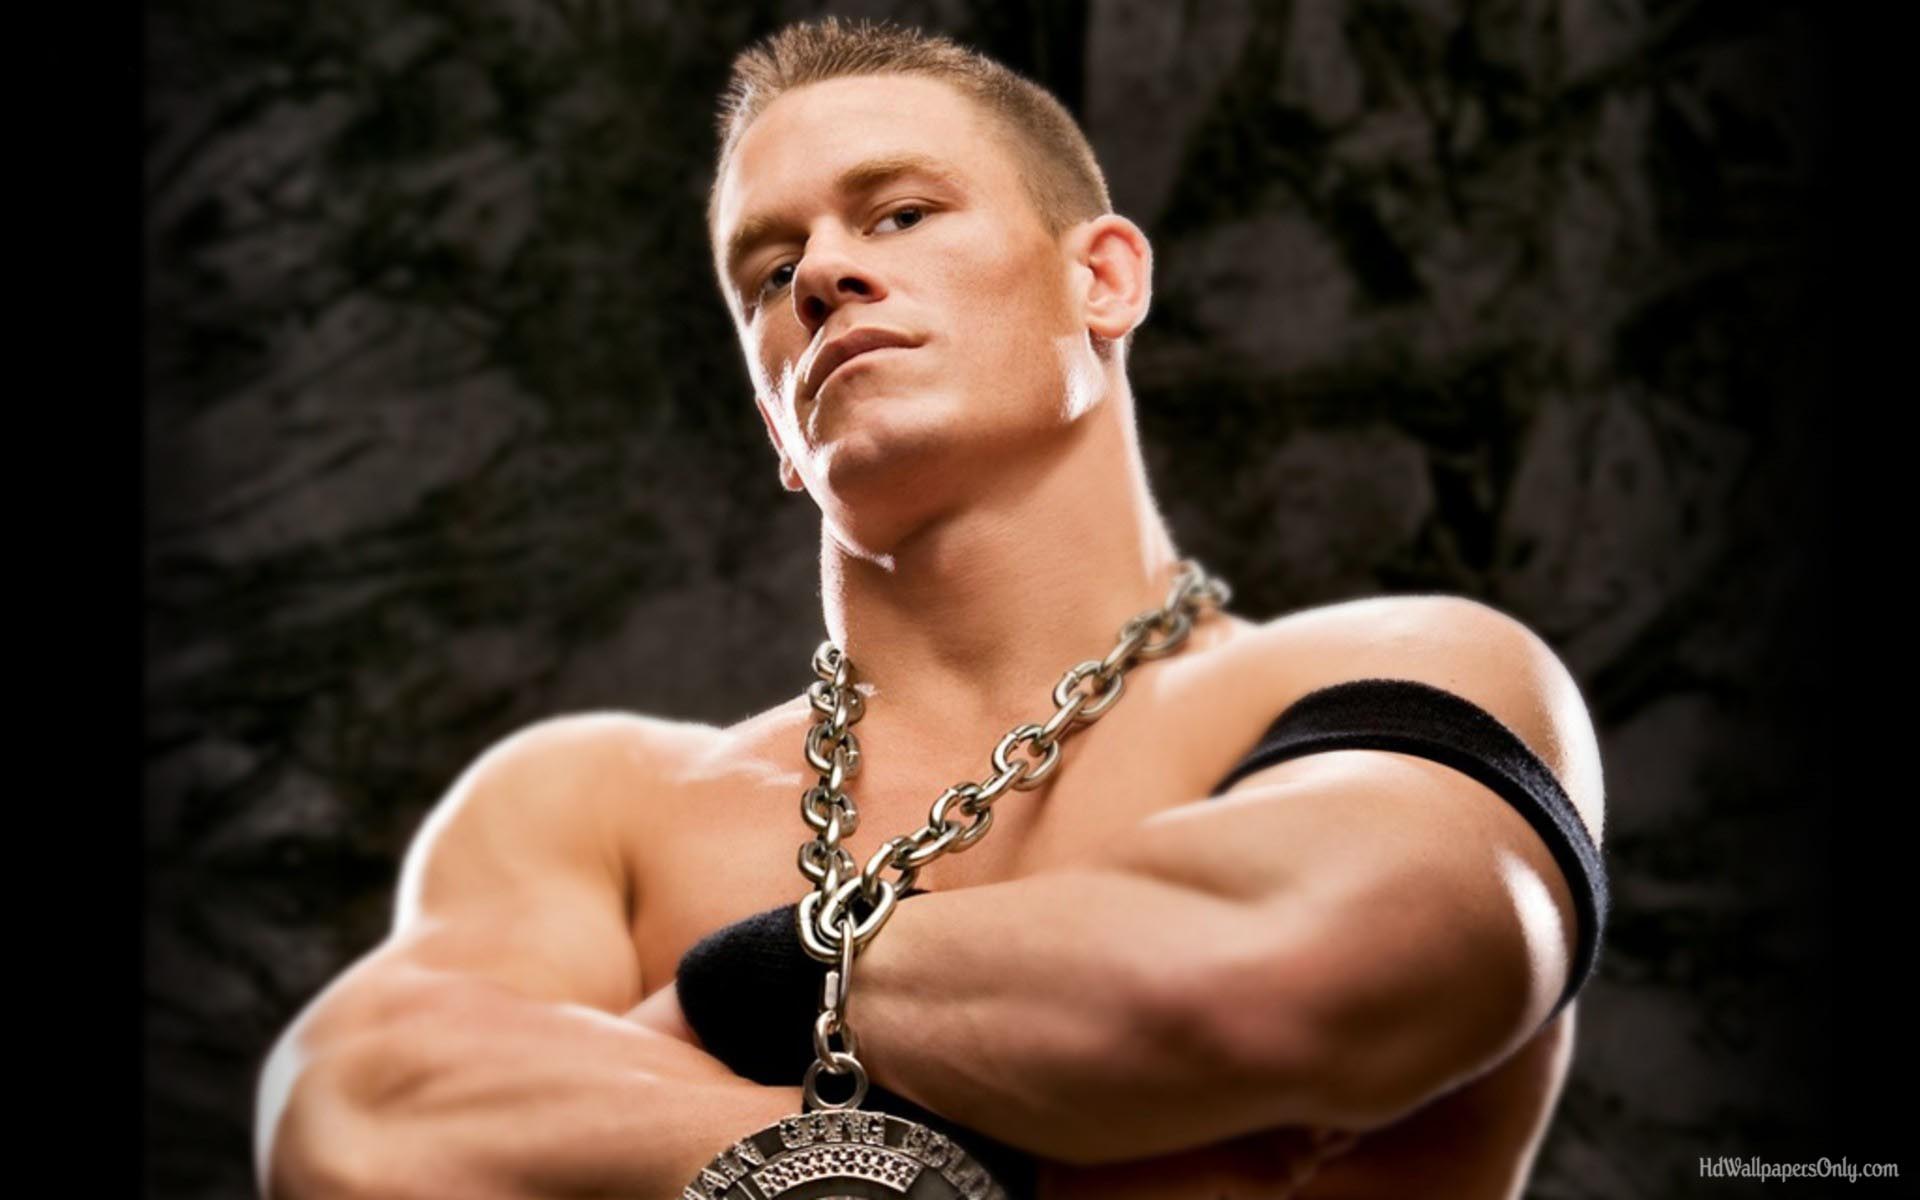 image For > Wallpaper Of John Cena For Facebook Profile